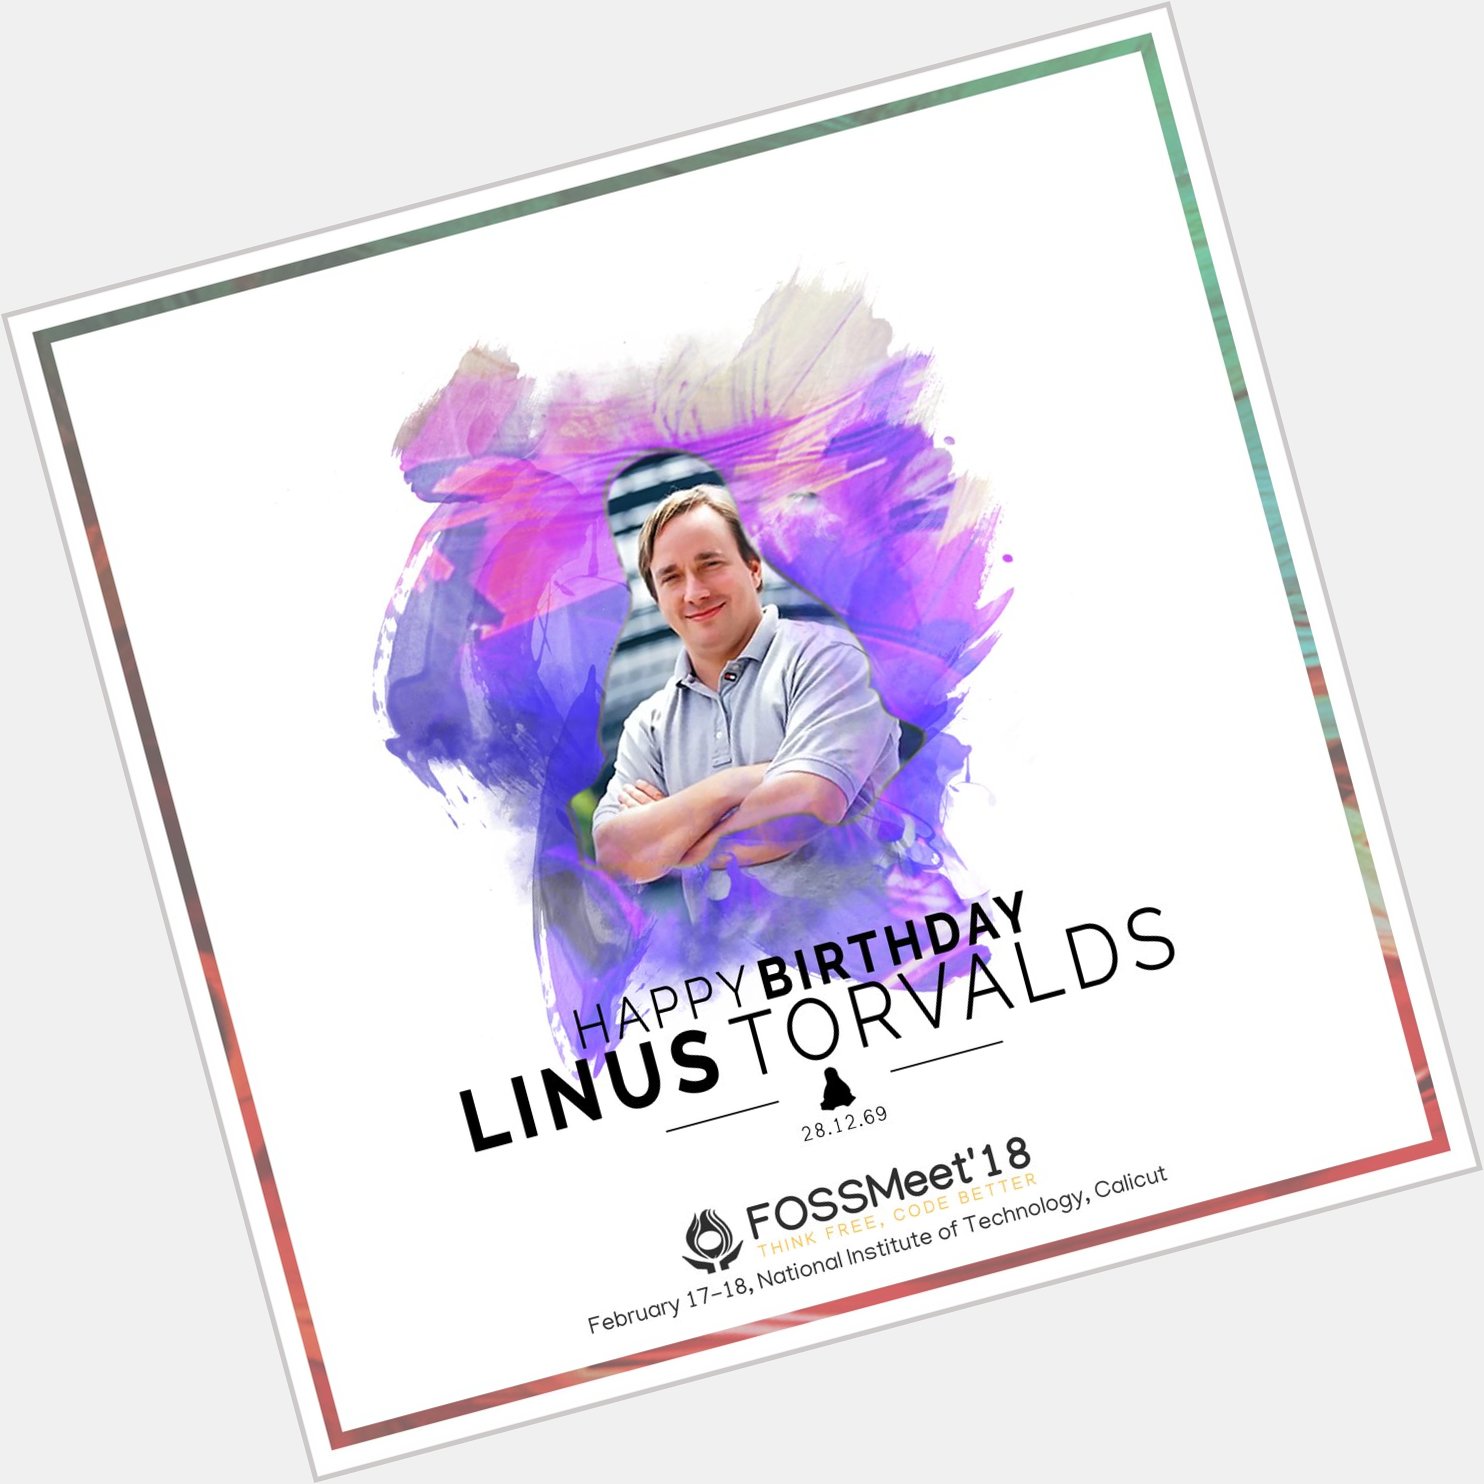 Happy Birthday Linus Torvalds! 